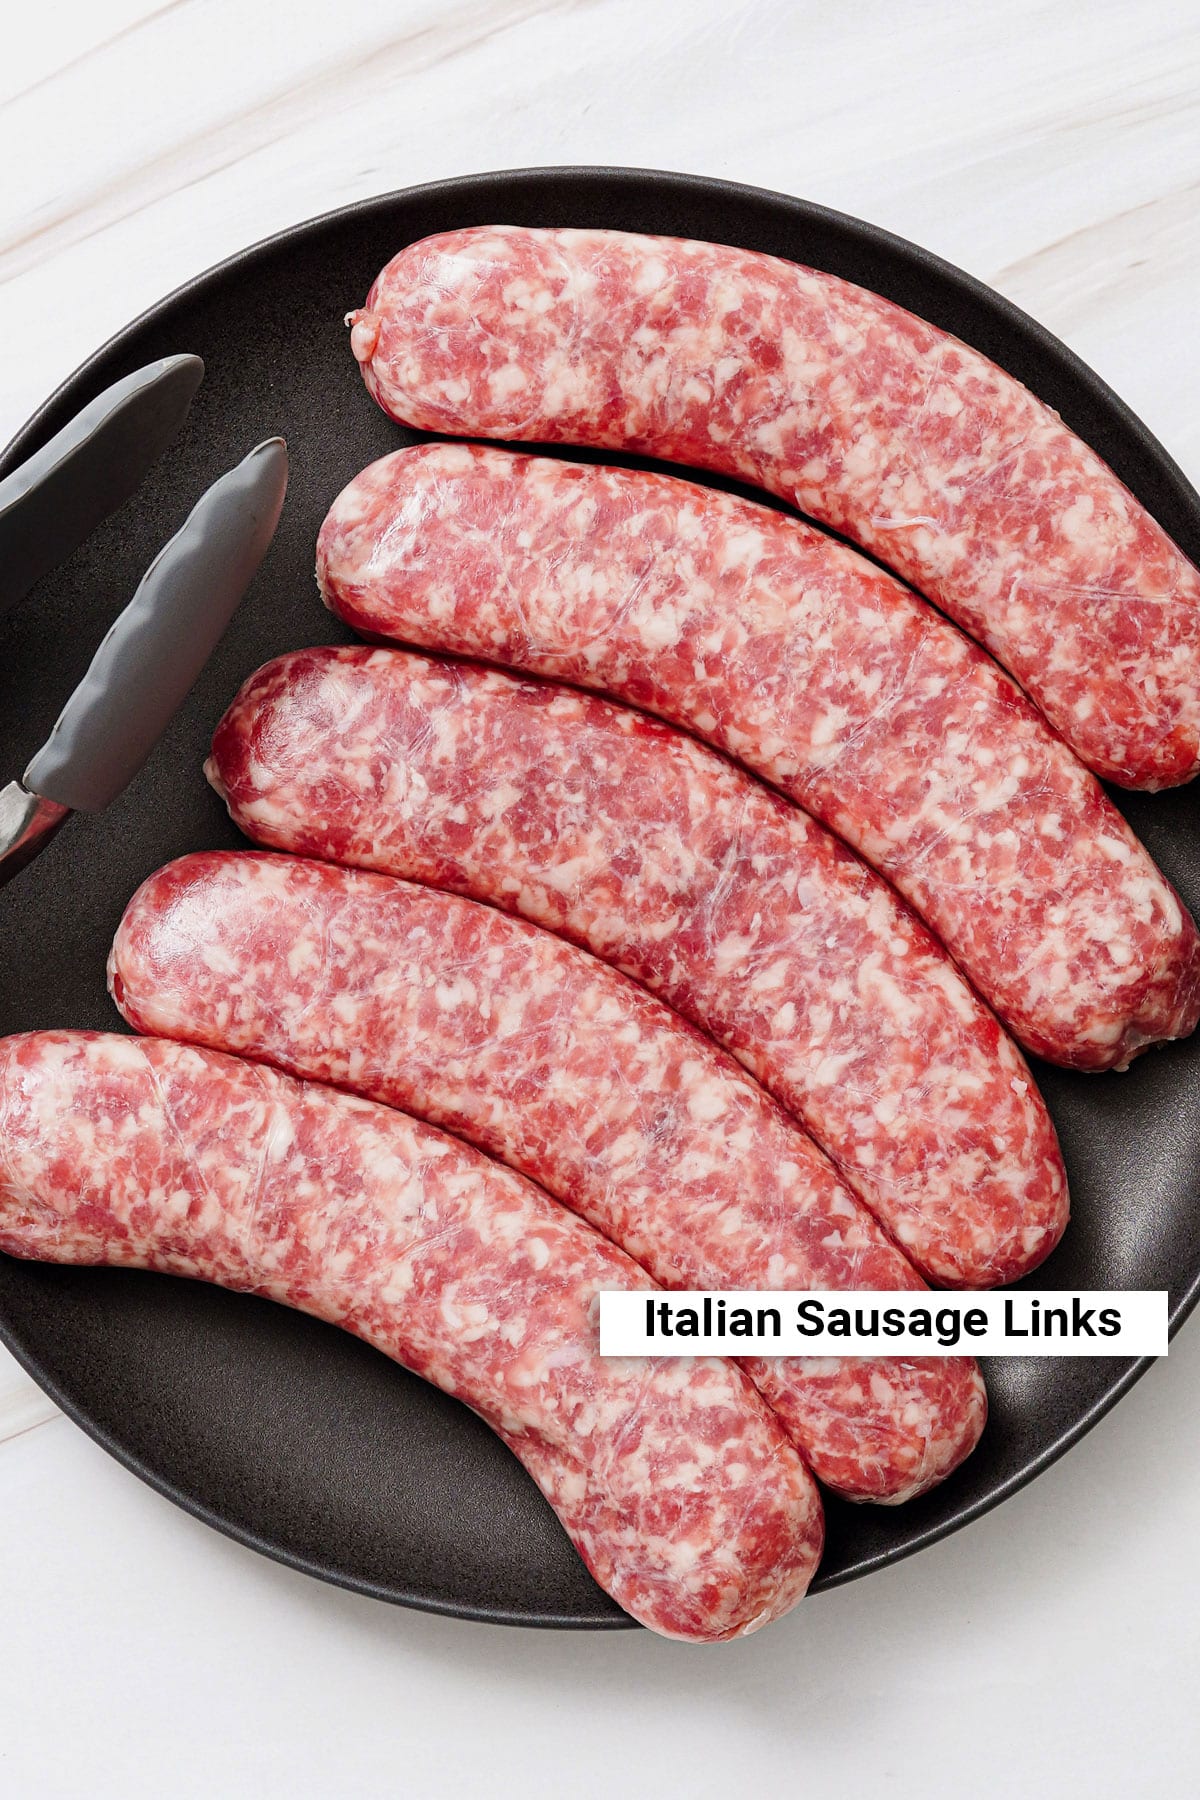 Uncooked Italian sausage links